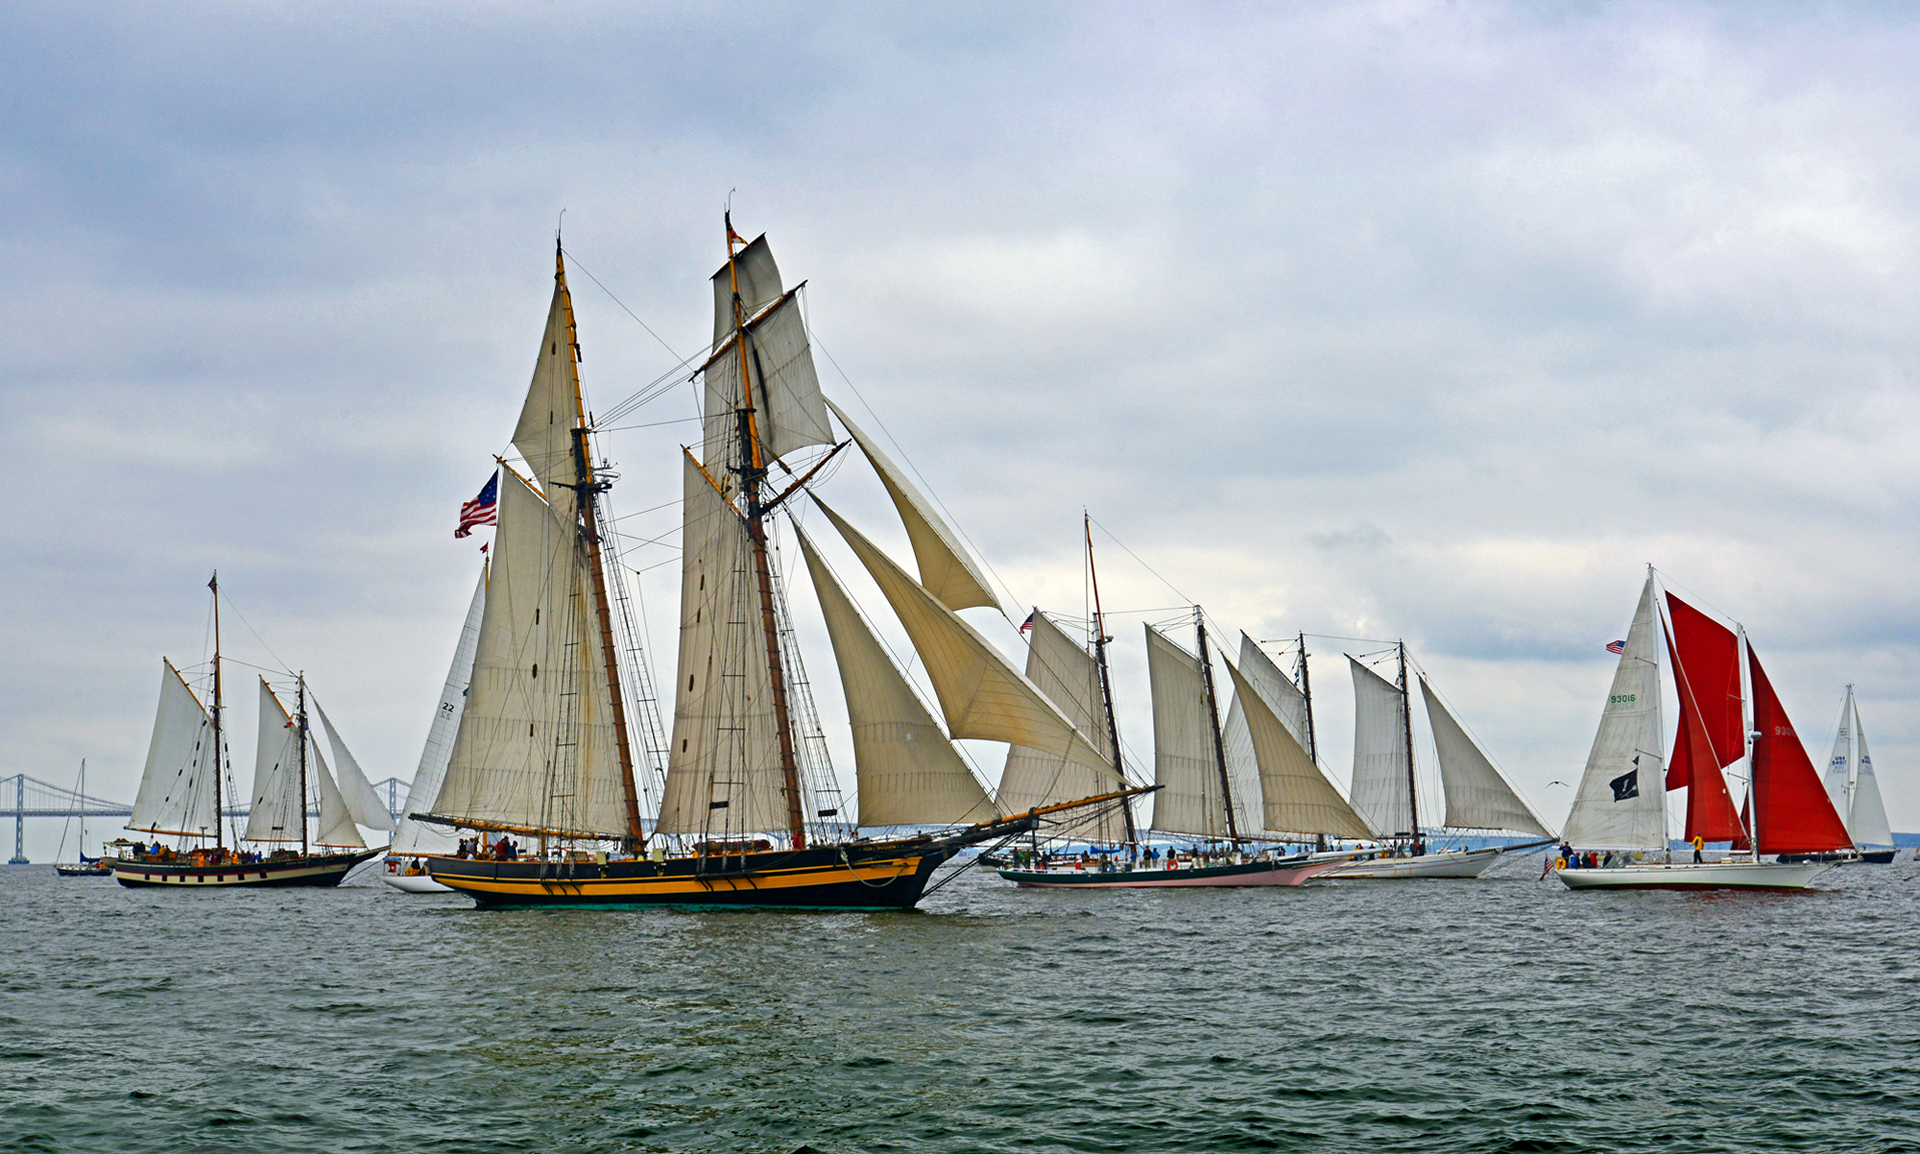 The start of the Great Chesapeake Bay Schooner Race with 4 schooners in picture